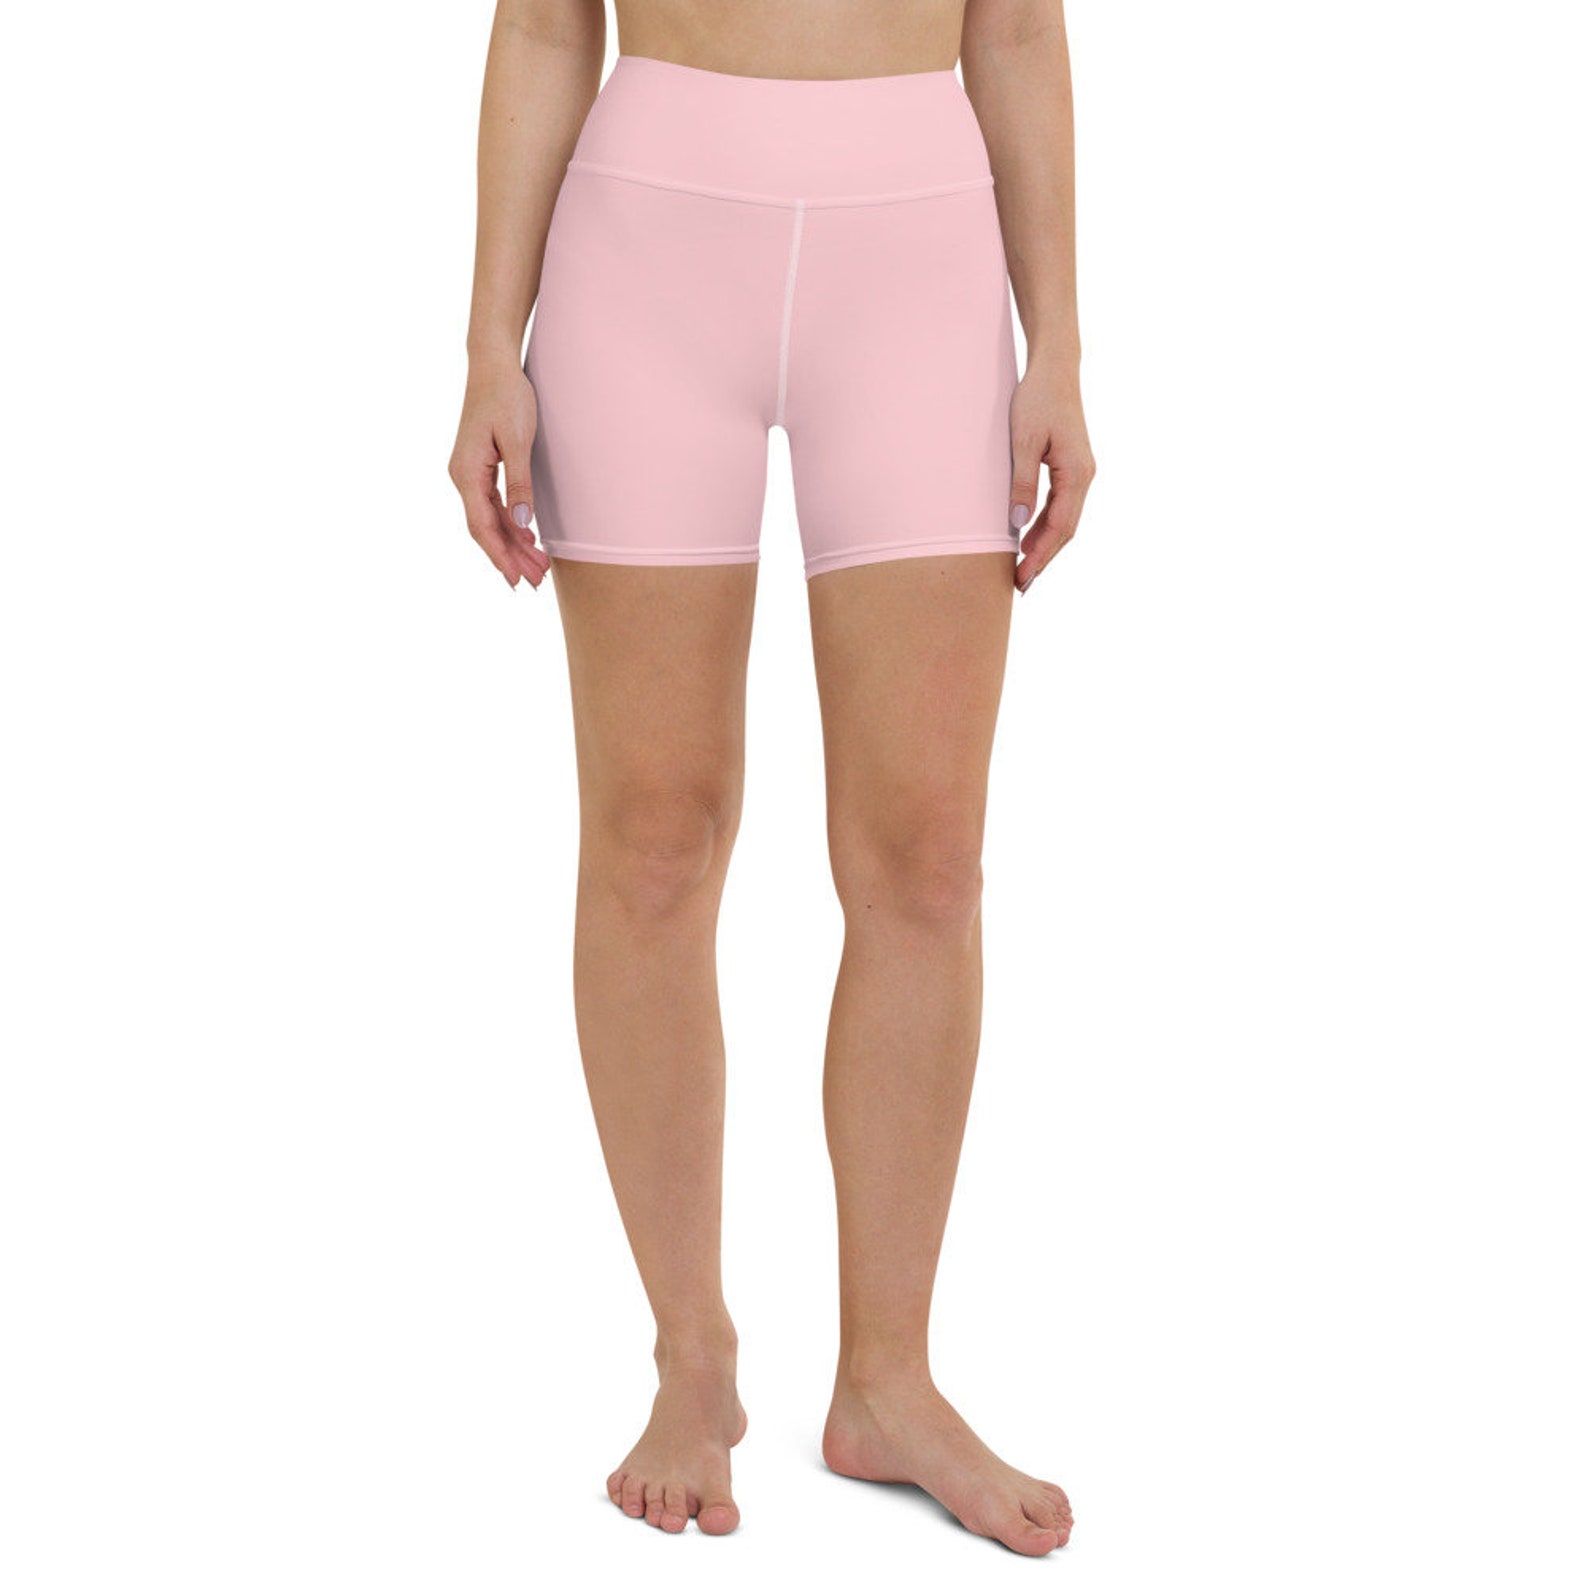 Shorts W/ Pocket Blush Pink Biker Shorts for Women Cycling - Etsy